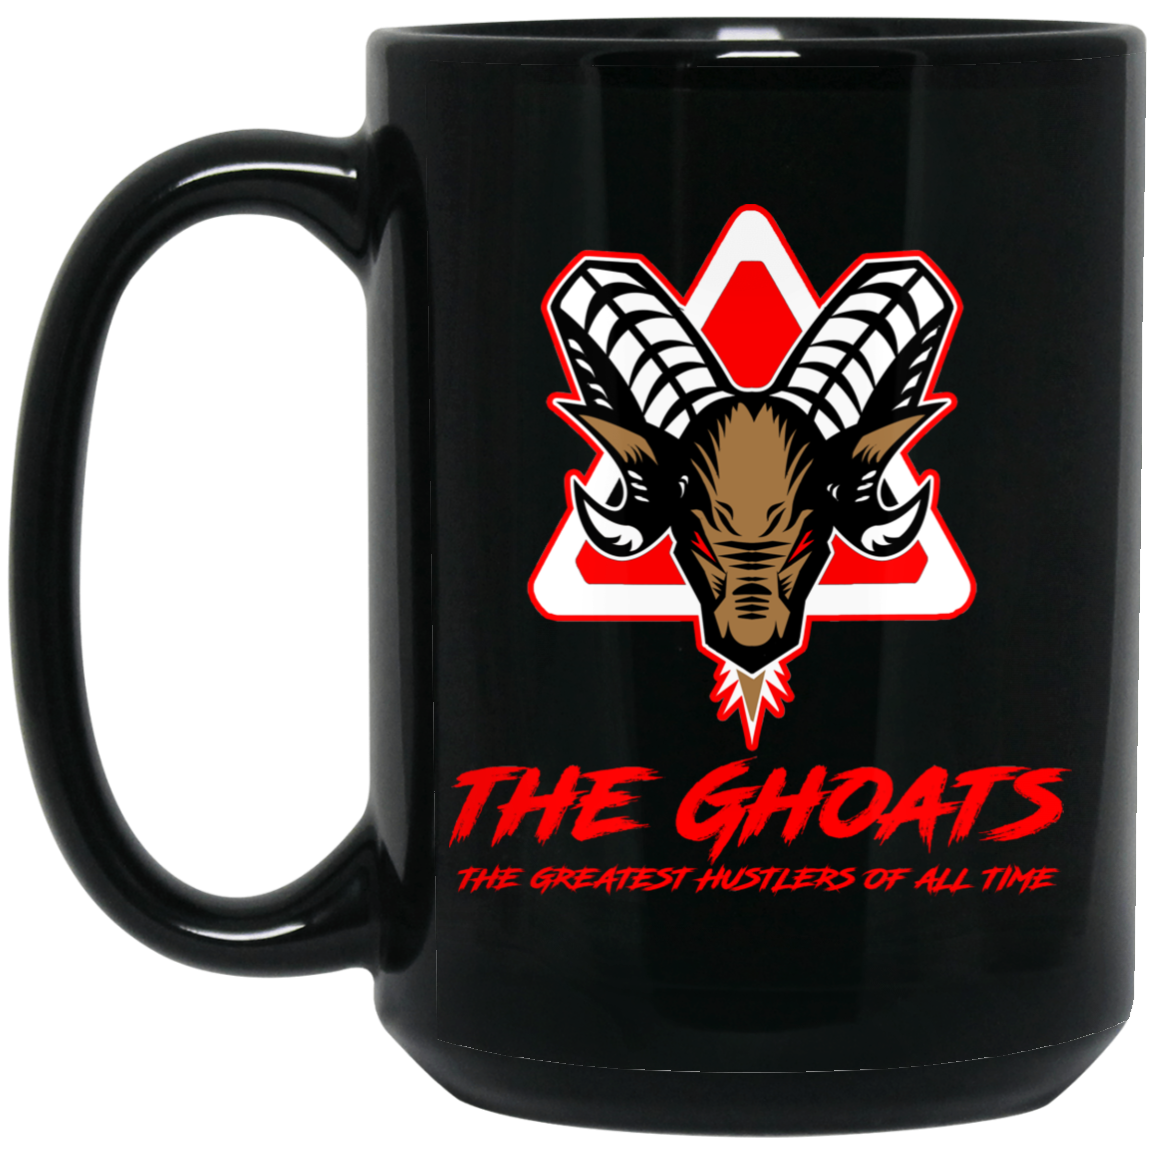 The GHOATS custom design #7. The Best Offence Is A Good Defense. Pool/Billiards. 15 oz. Black Mug